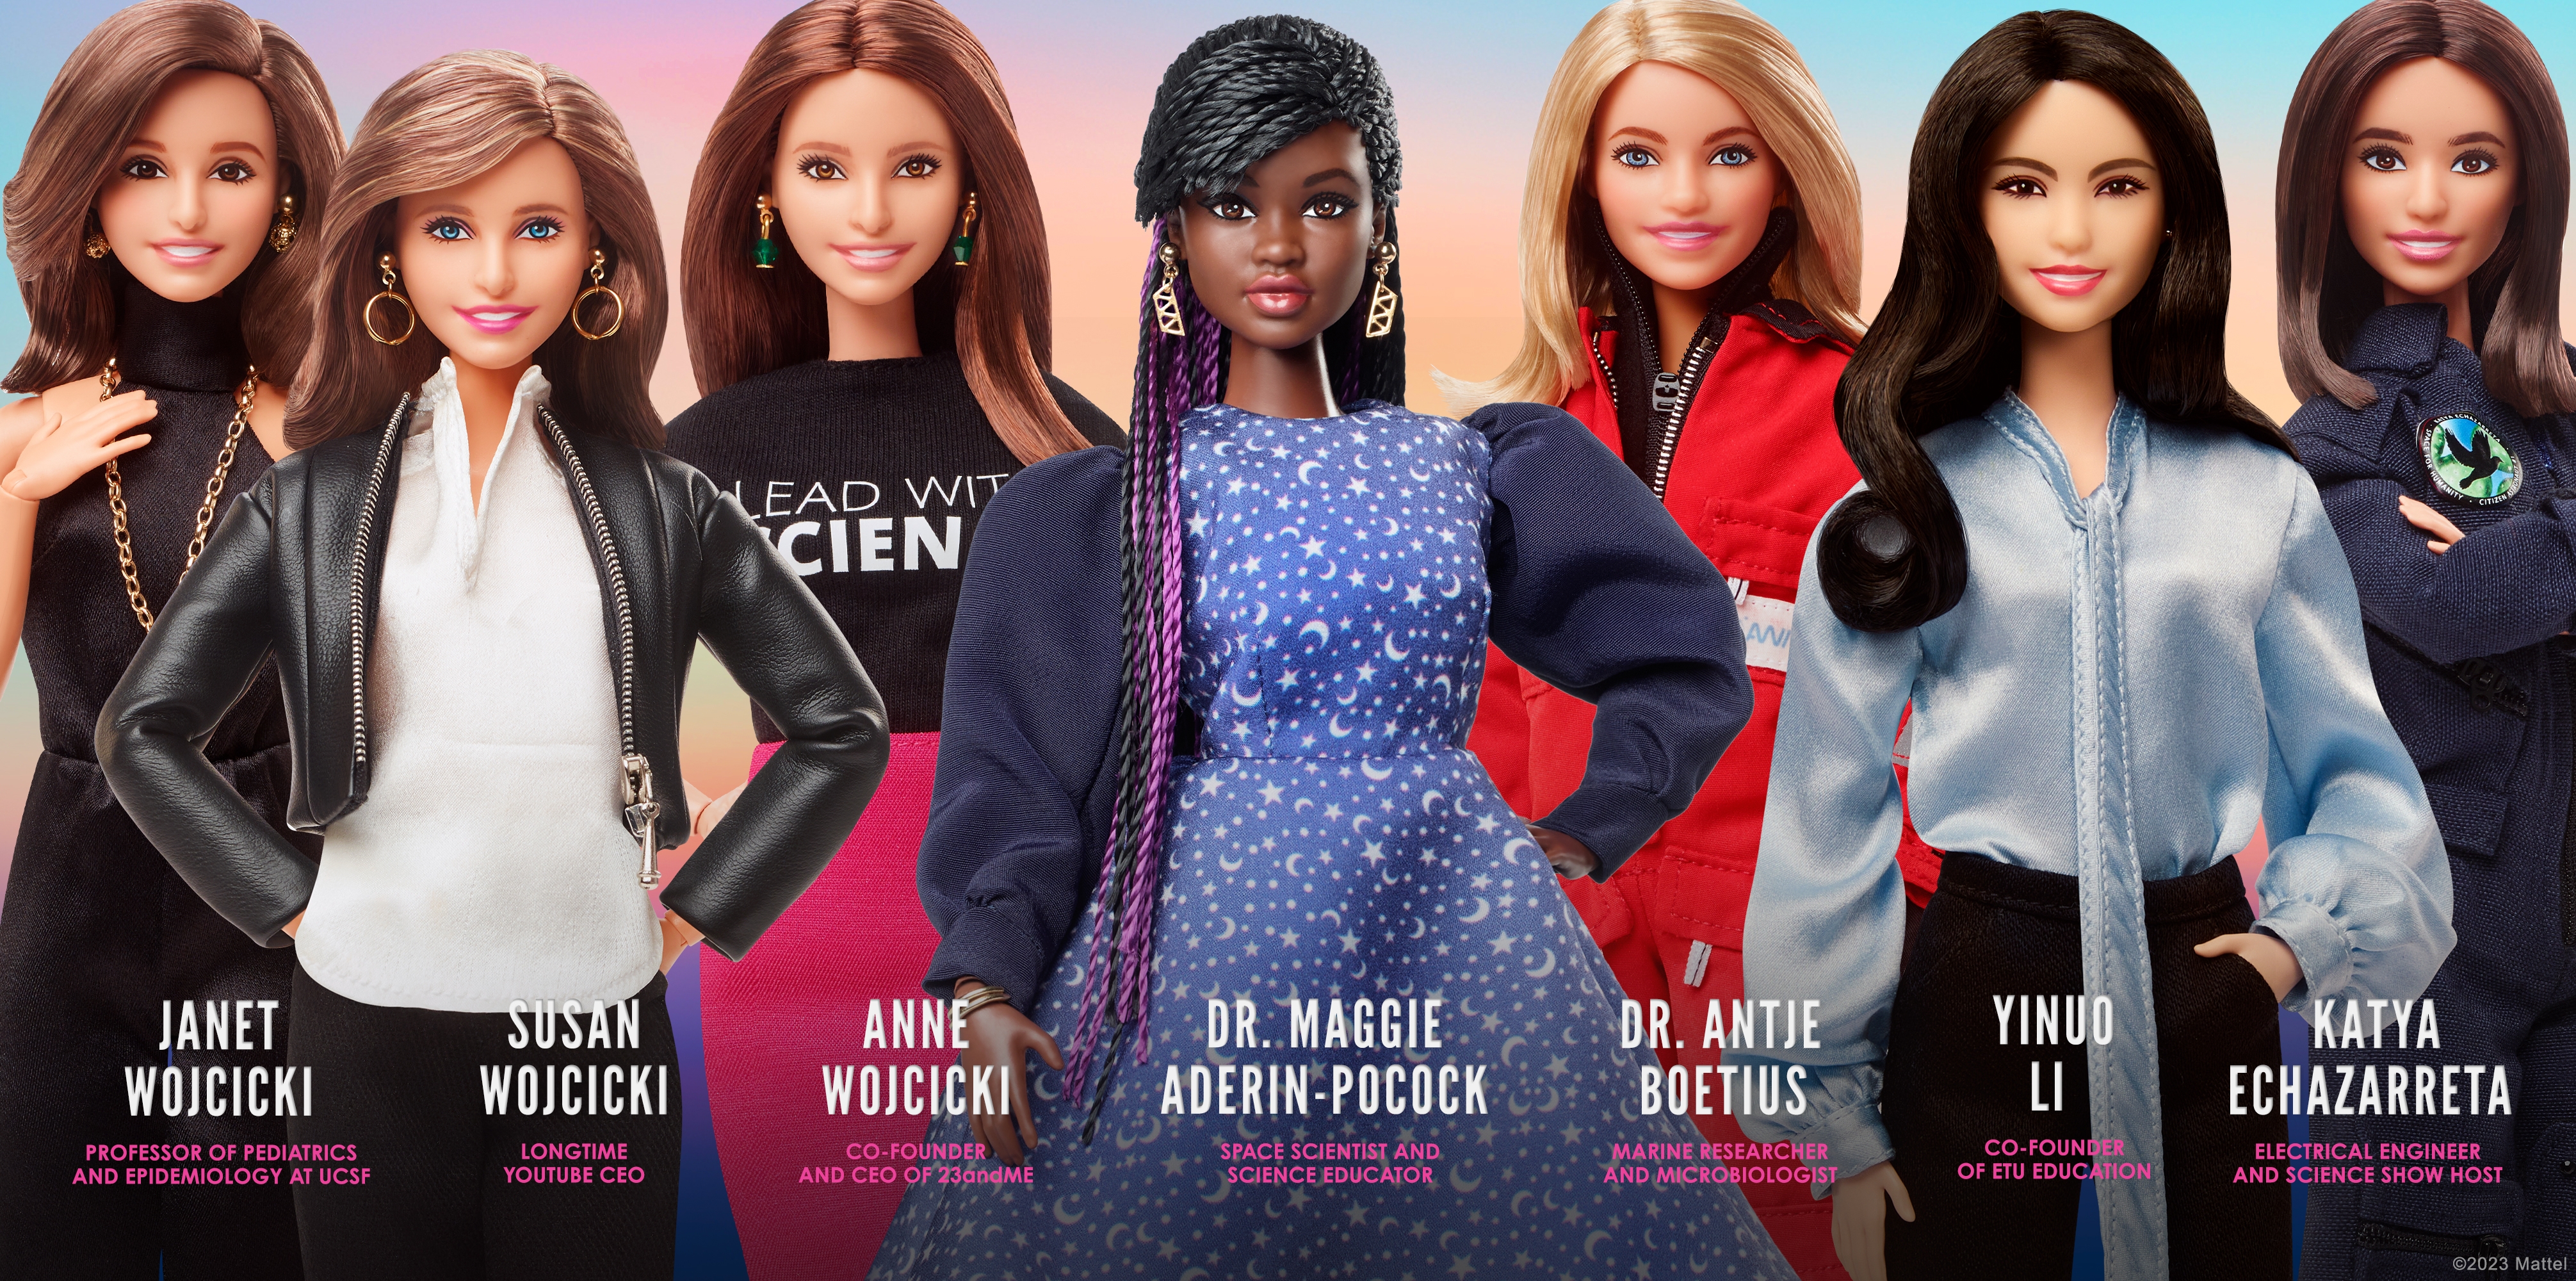 Genuine Barbie doll Barbie variety shape doll girl gift multi